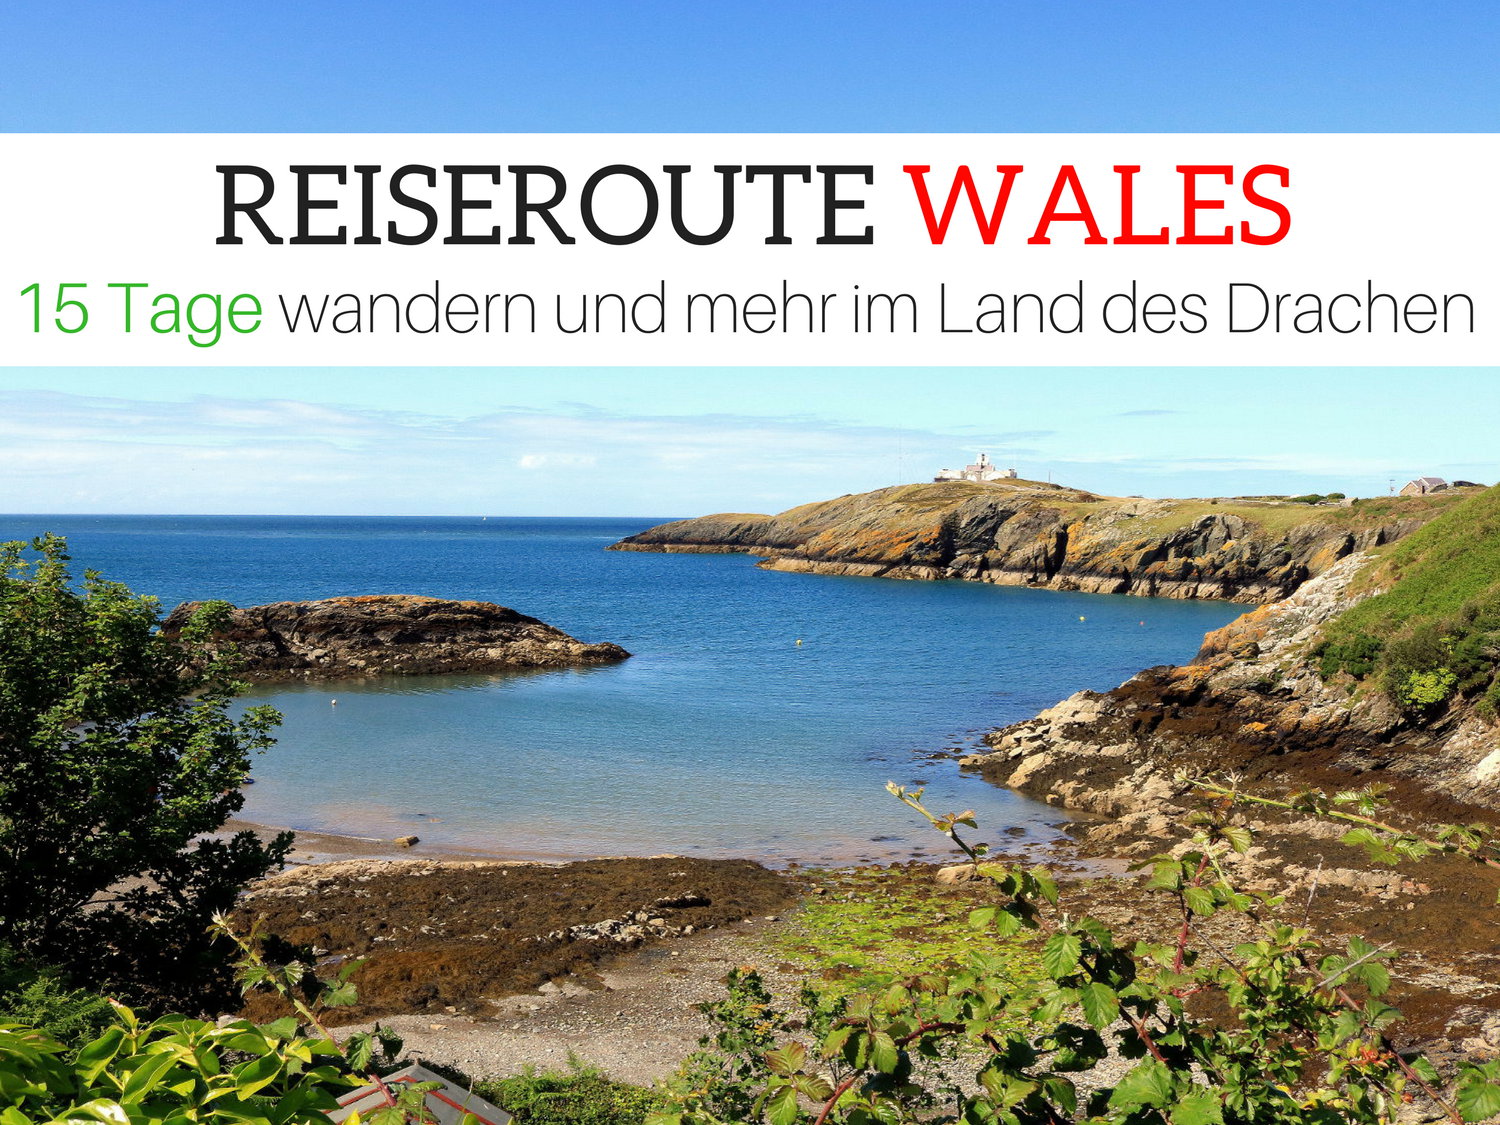 Reiseroute Wales